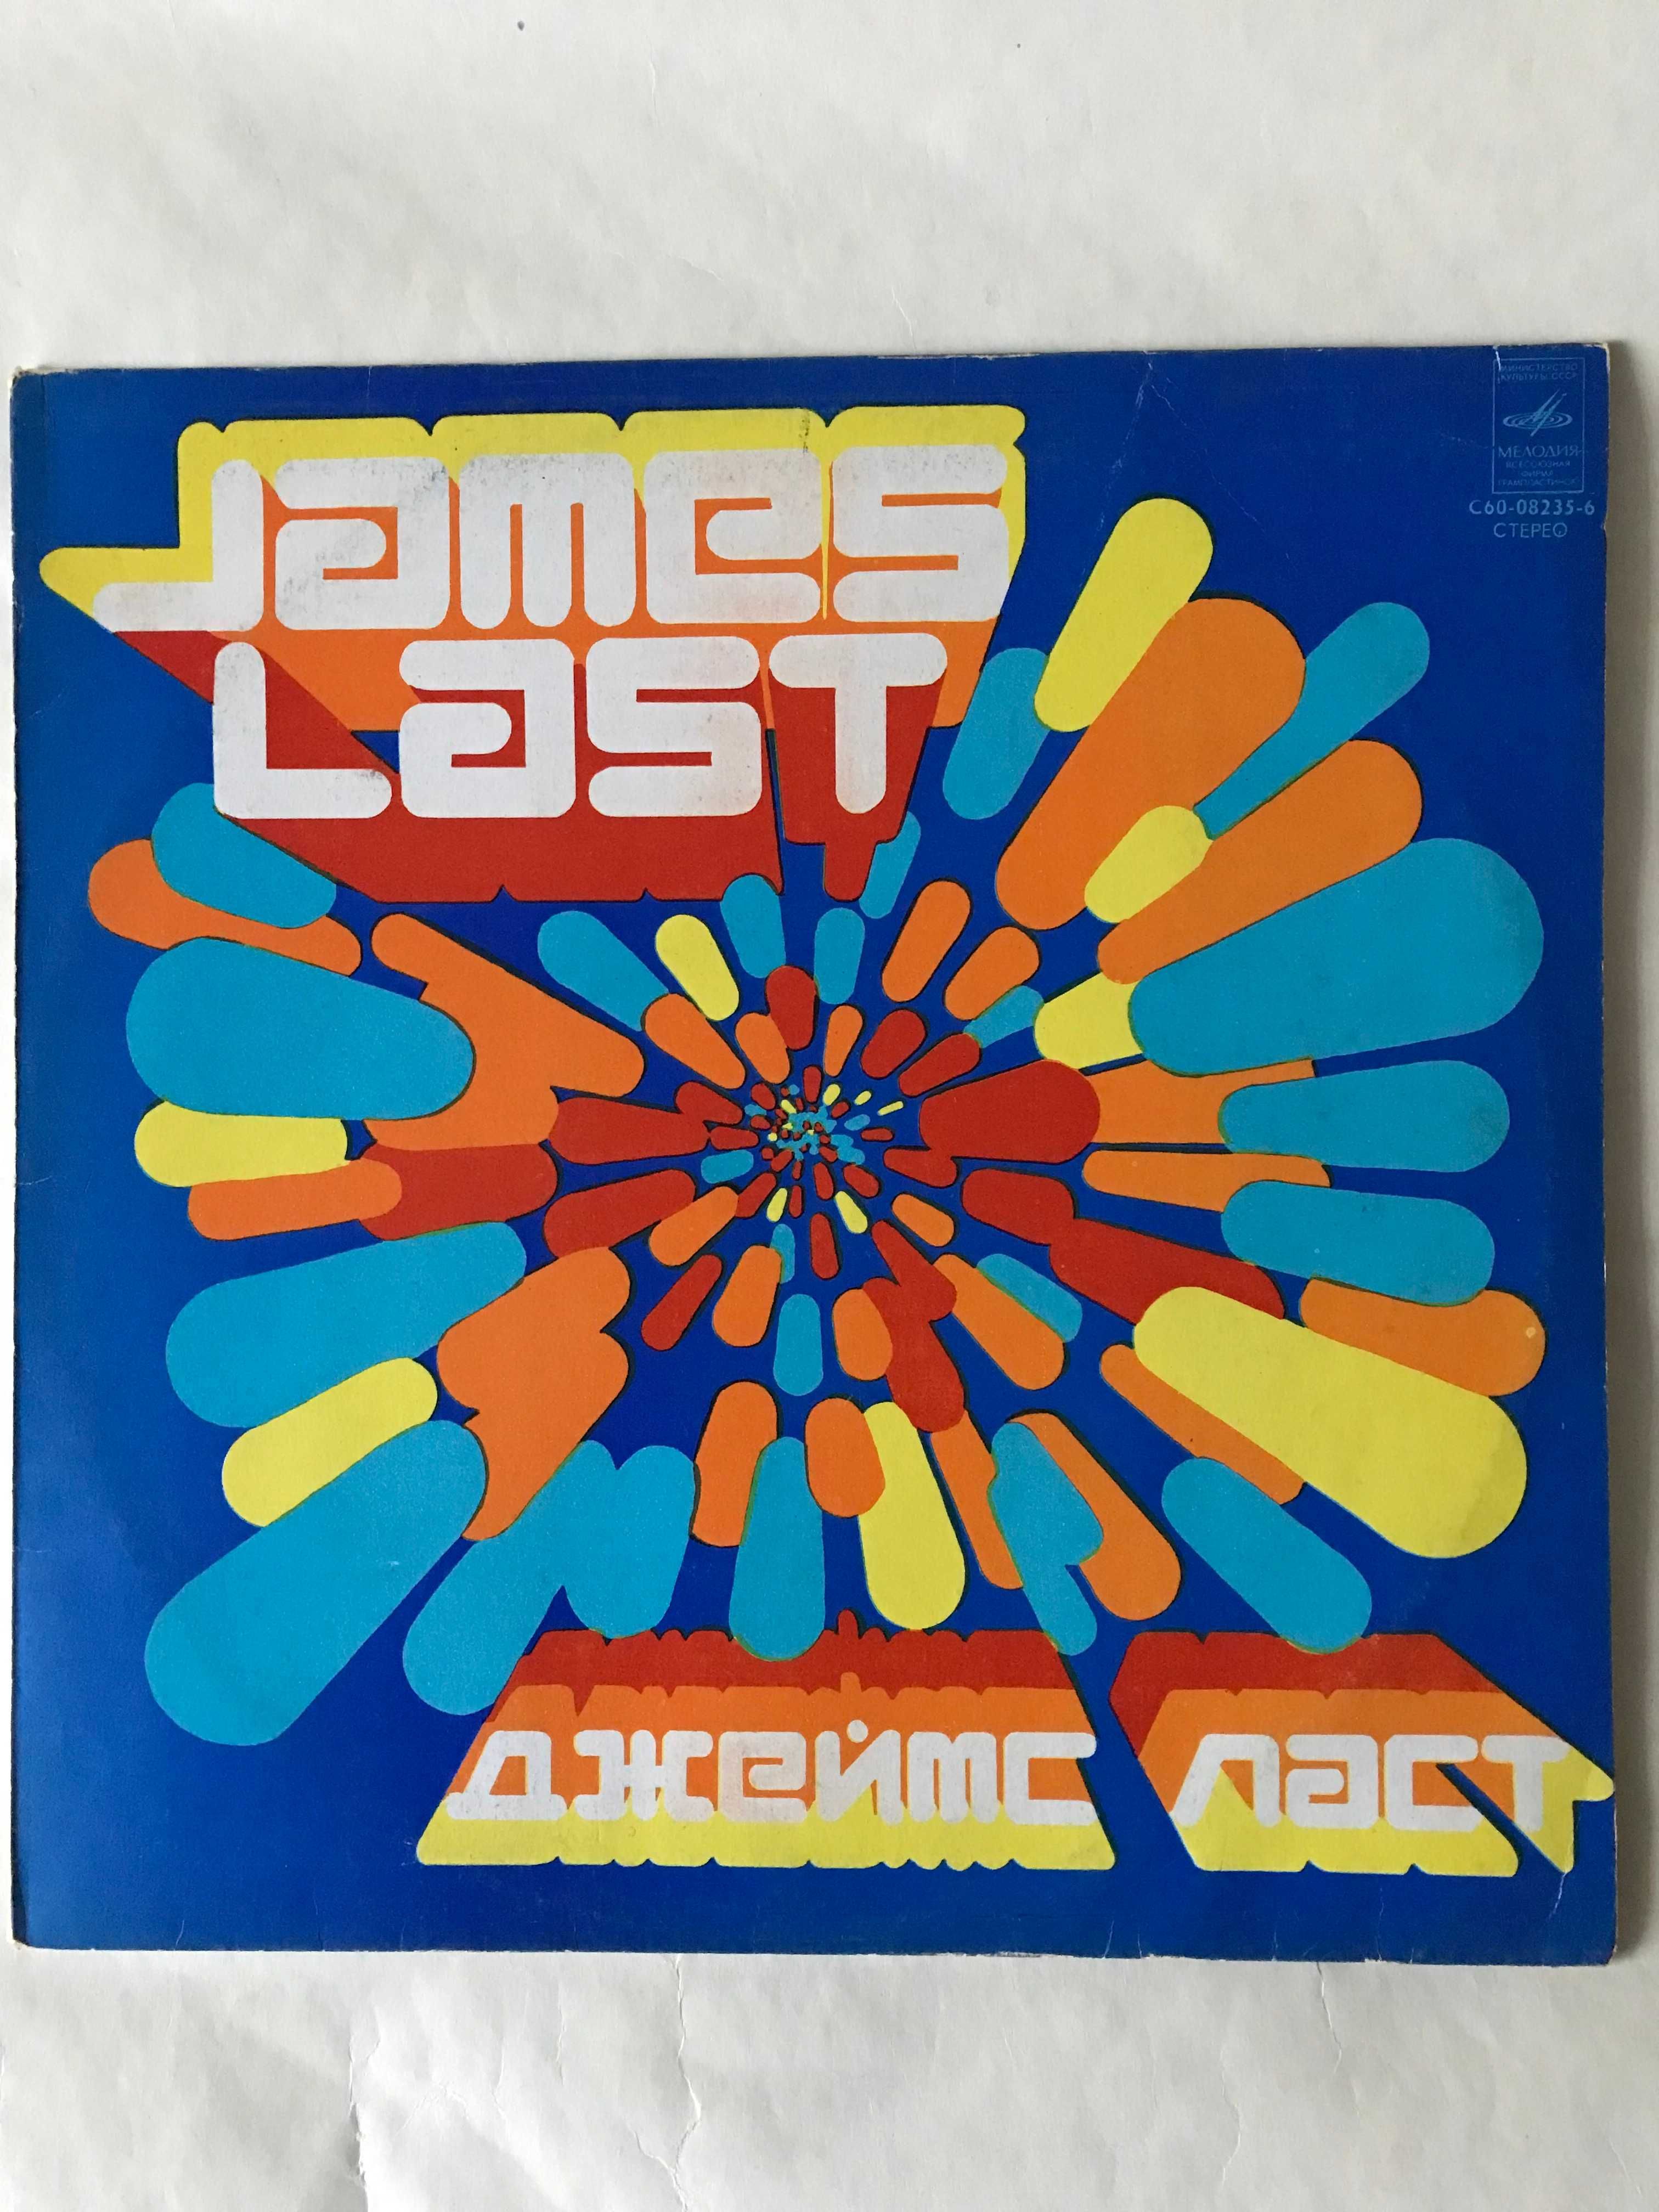 Виниловая пластинка Джеймс Ласт "Танцуем без перерыва, 1976".